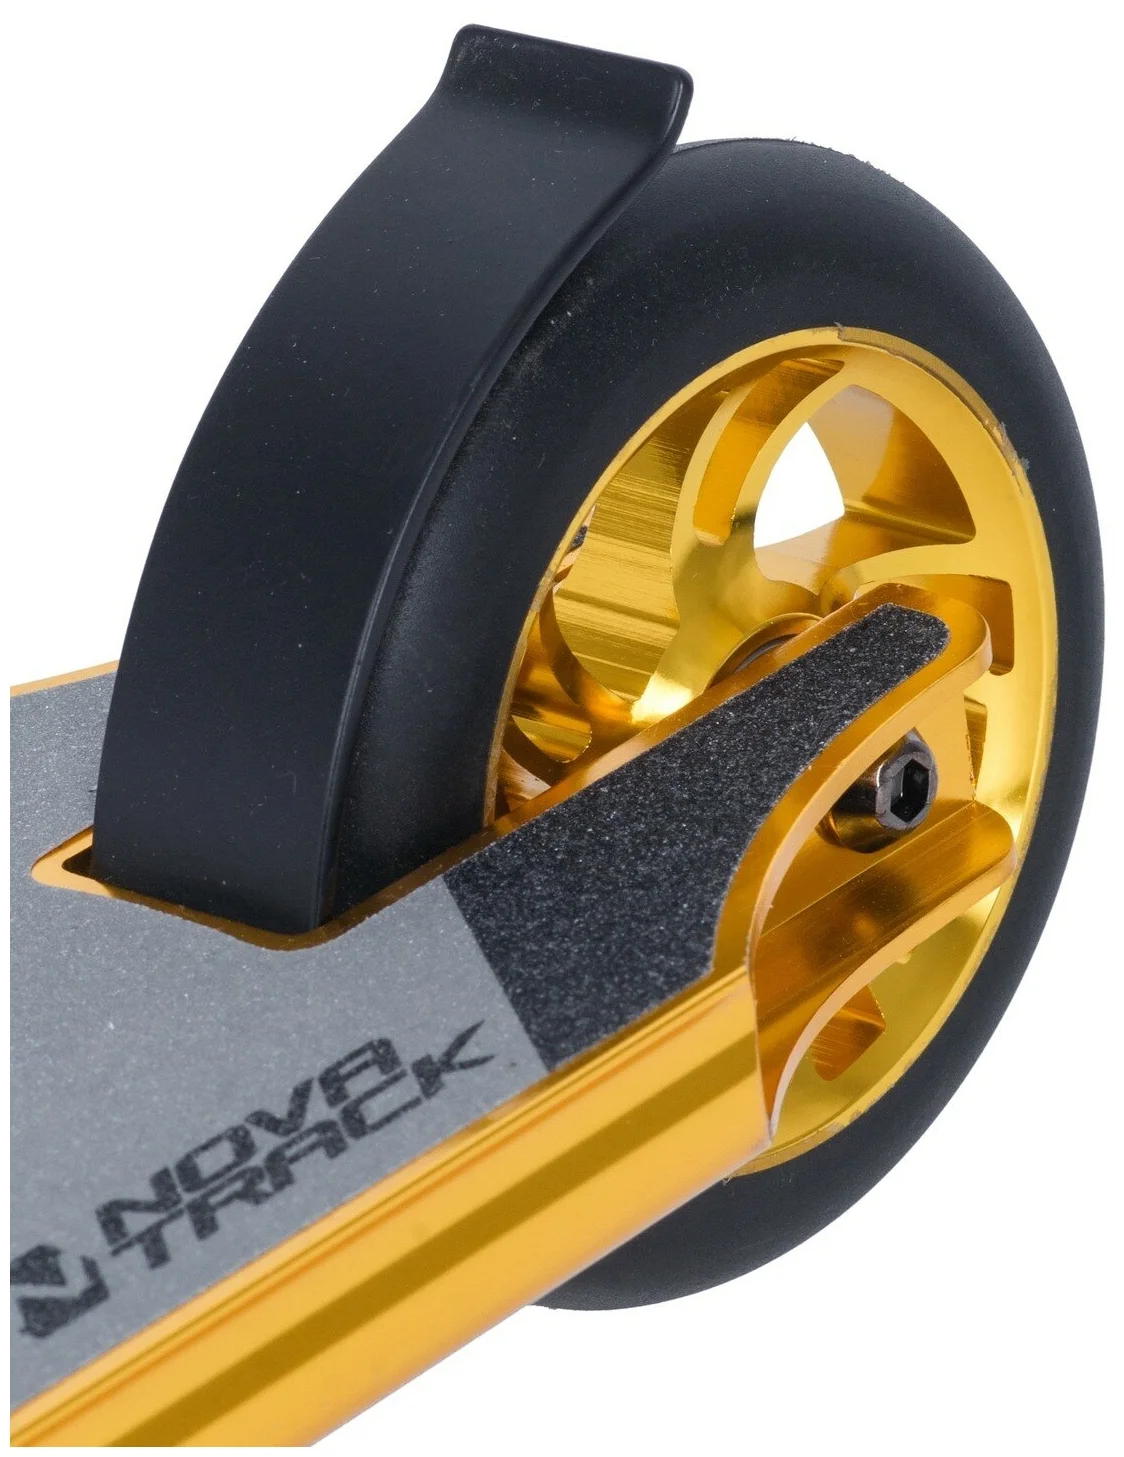 Novatrack Pixel Pro 101 / 102/ 103 - диаметр колес 110 мм, подшипники ABEC 9